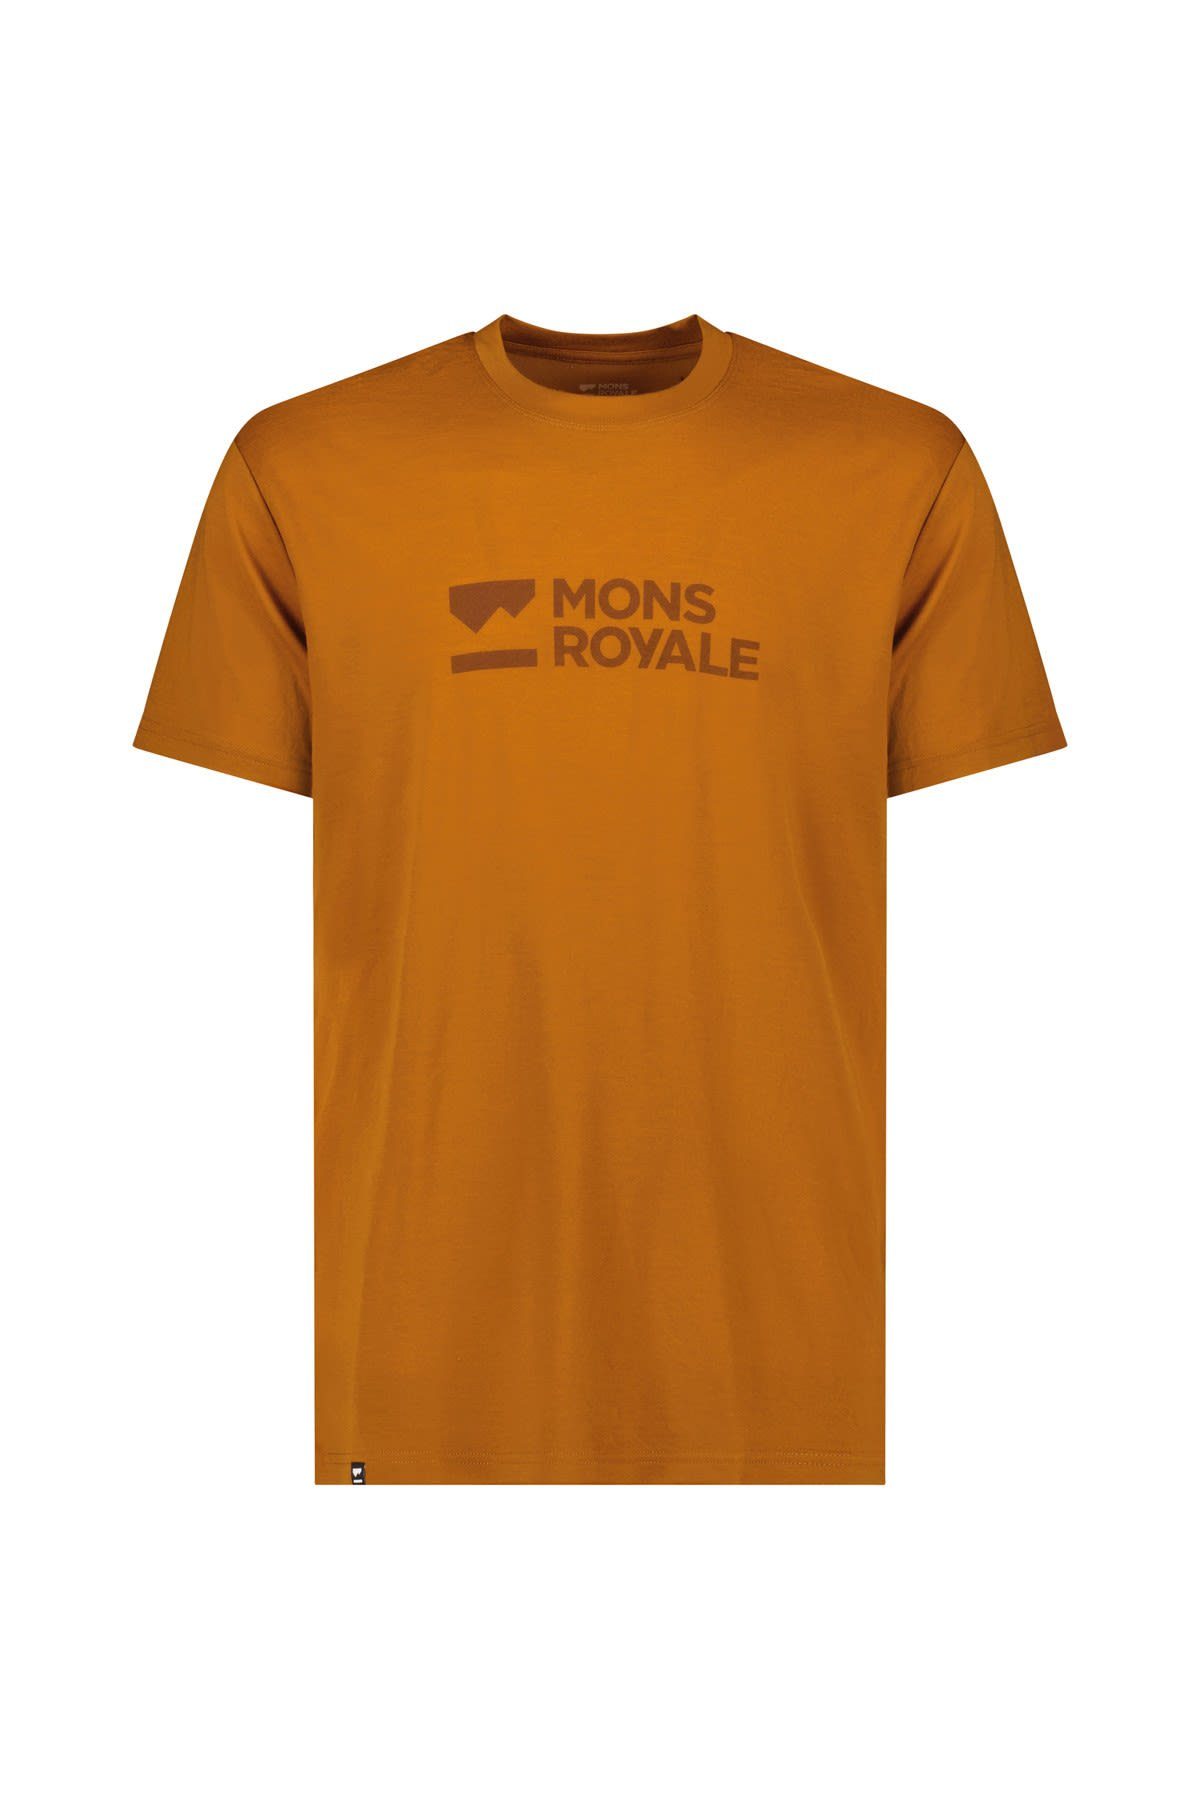 Mons Royale T-Shirt Mons Royale M Icon T-shirt Herren Kurzarm-Shirt Copper - Mons Logo